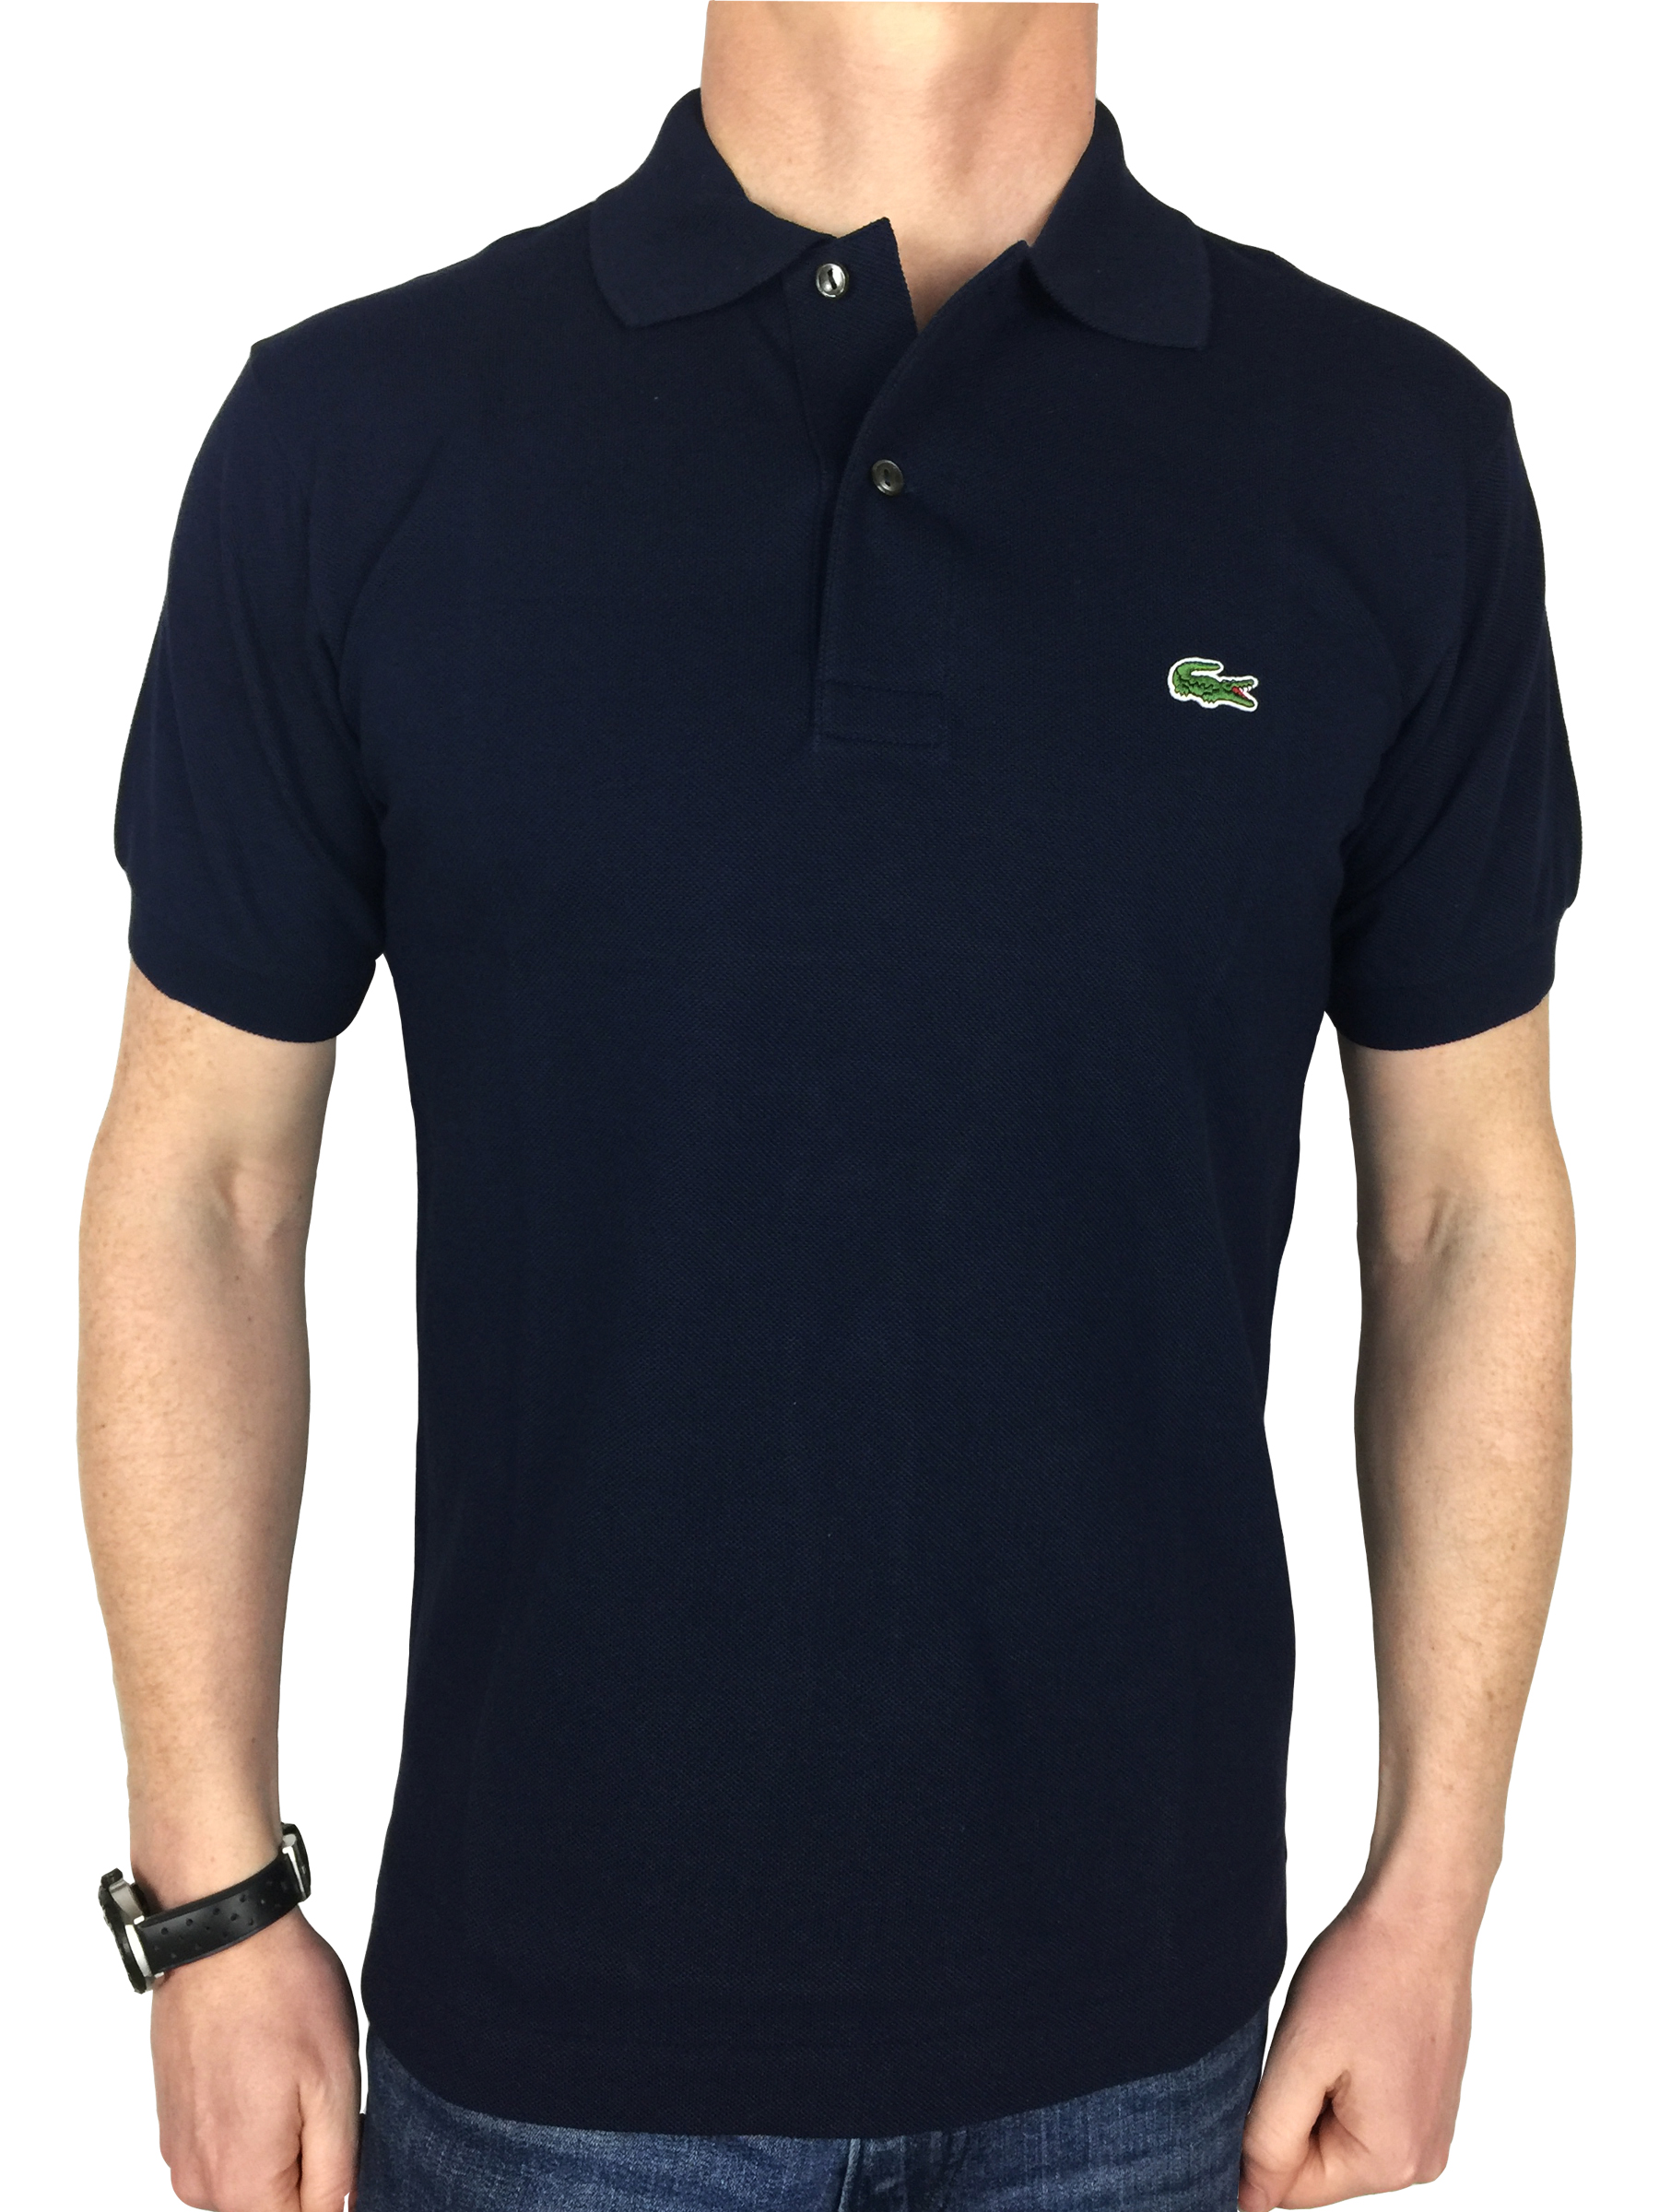 Lacoste Mens L1212 Polo Shirt in Navy Blue, BNWT, RRP £90 | eBay